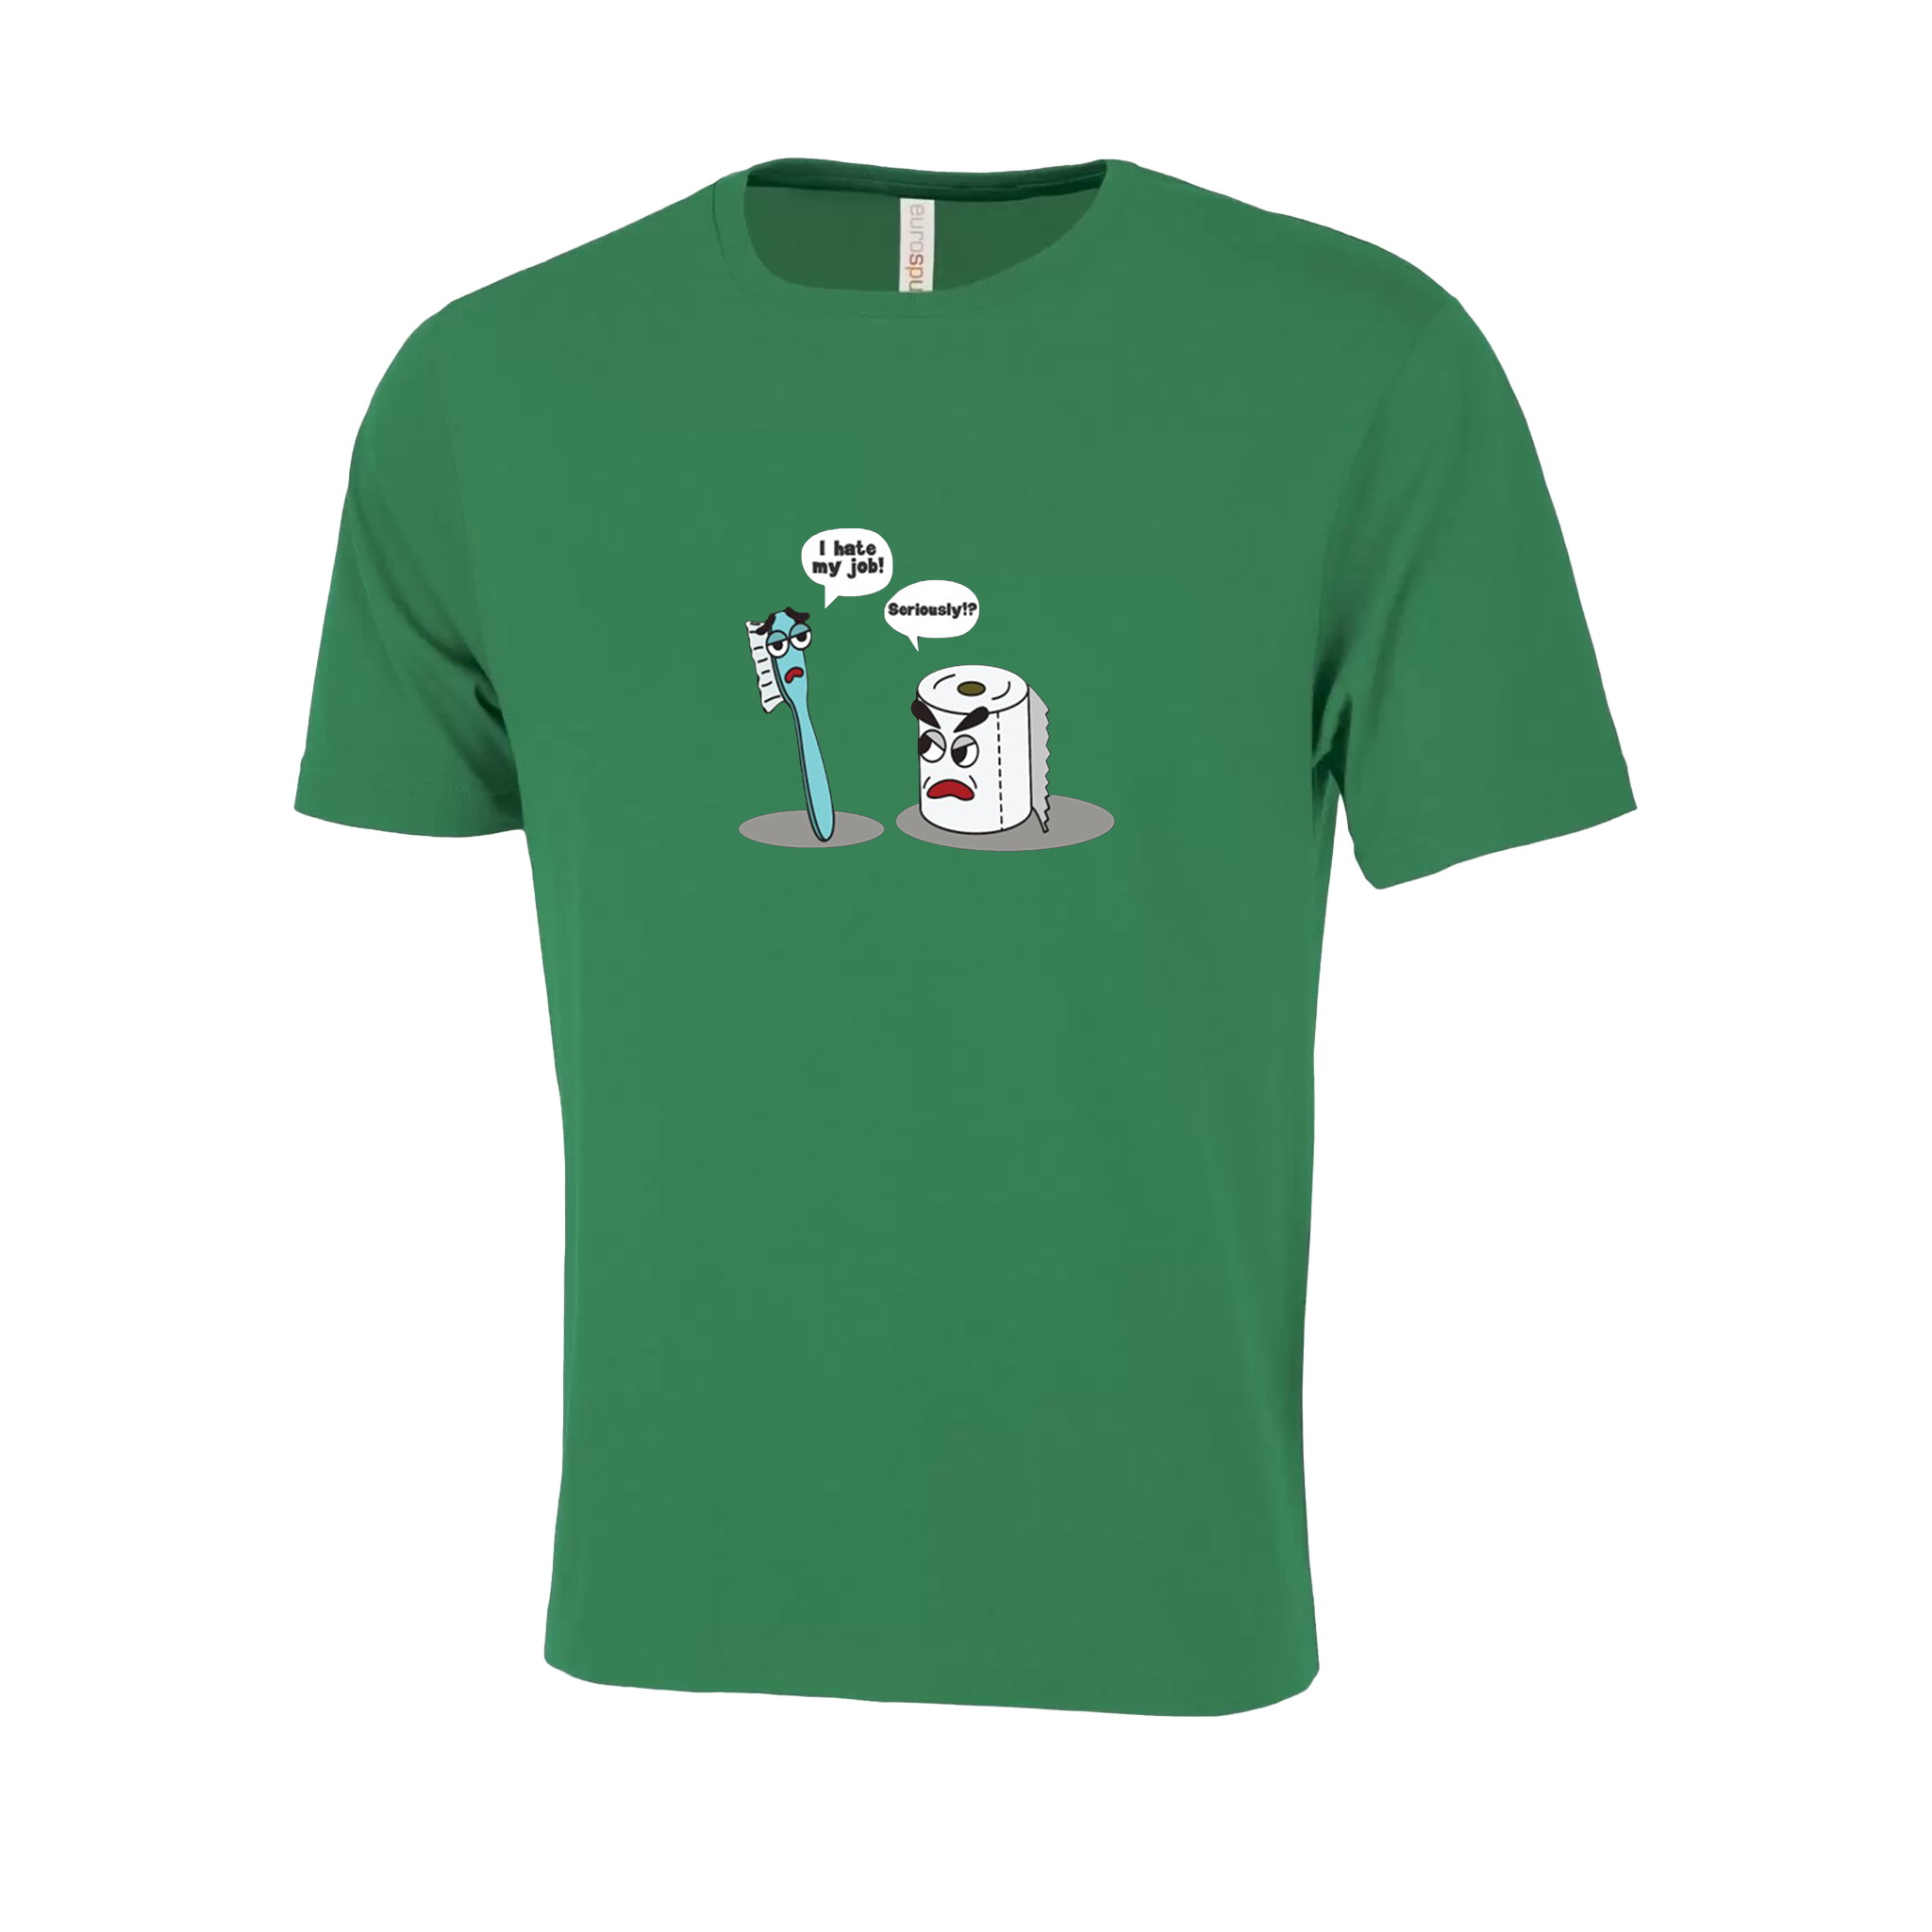 Toilet Humor Novelty T-Shirt - Adult Unisex Sizing XS-4XL - Green